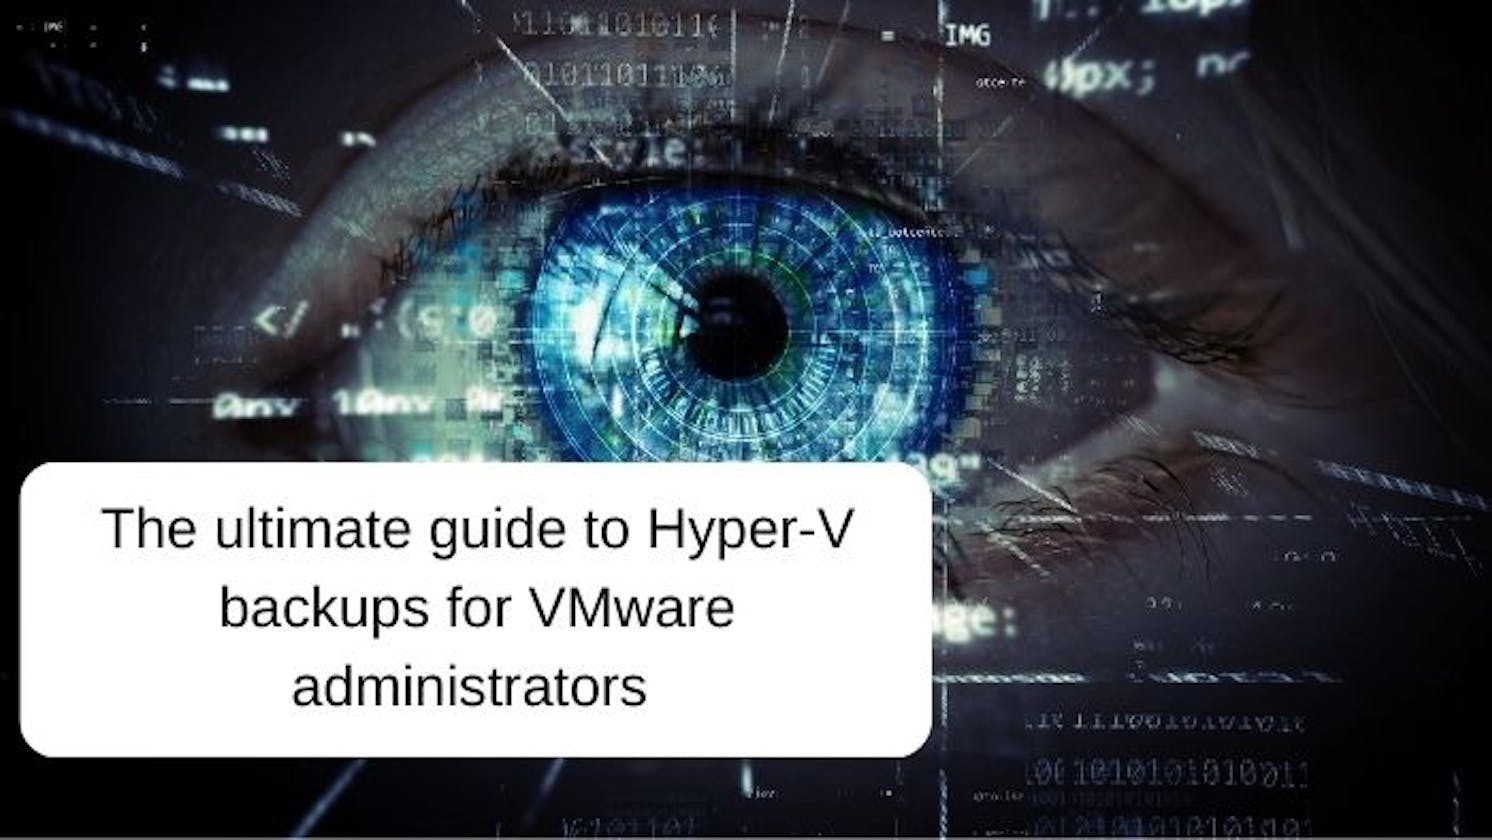 The ultimate guide to Hyper-V backups for VMware administrators